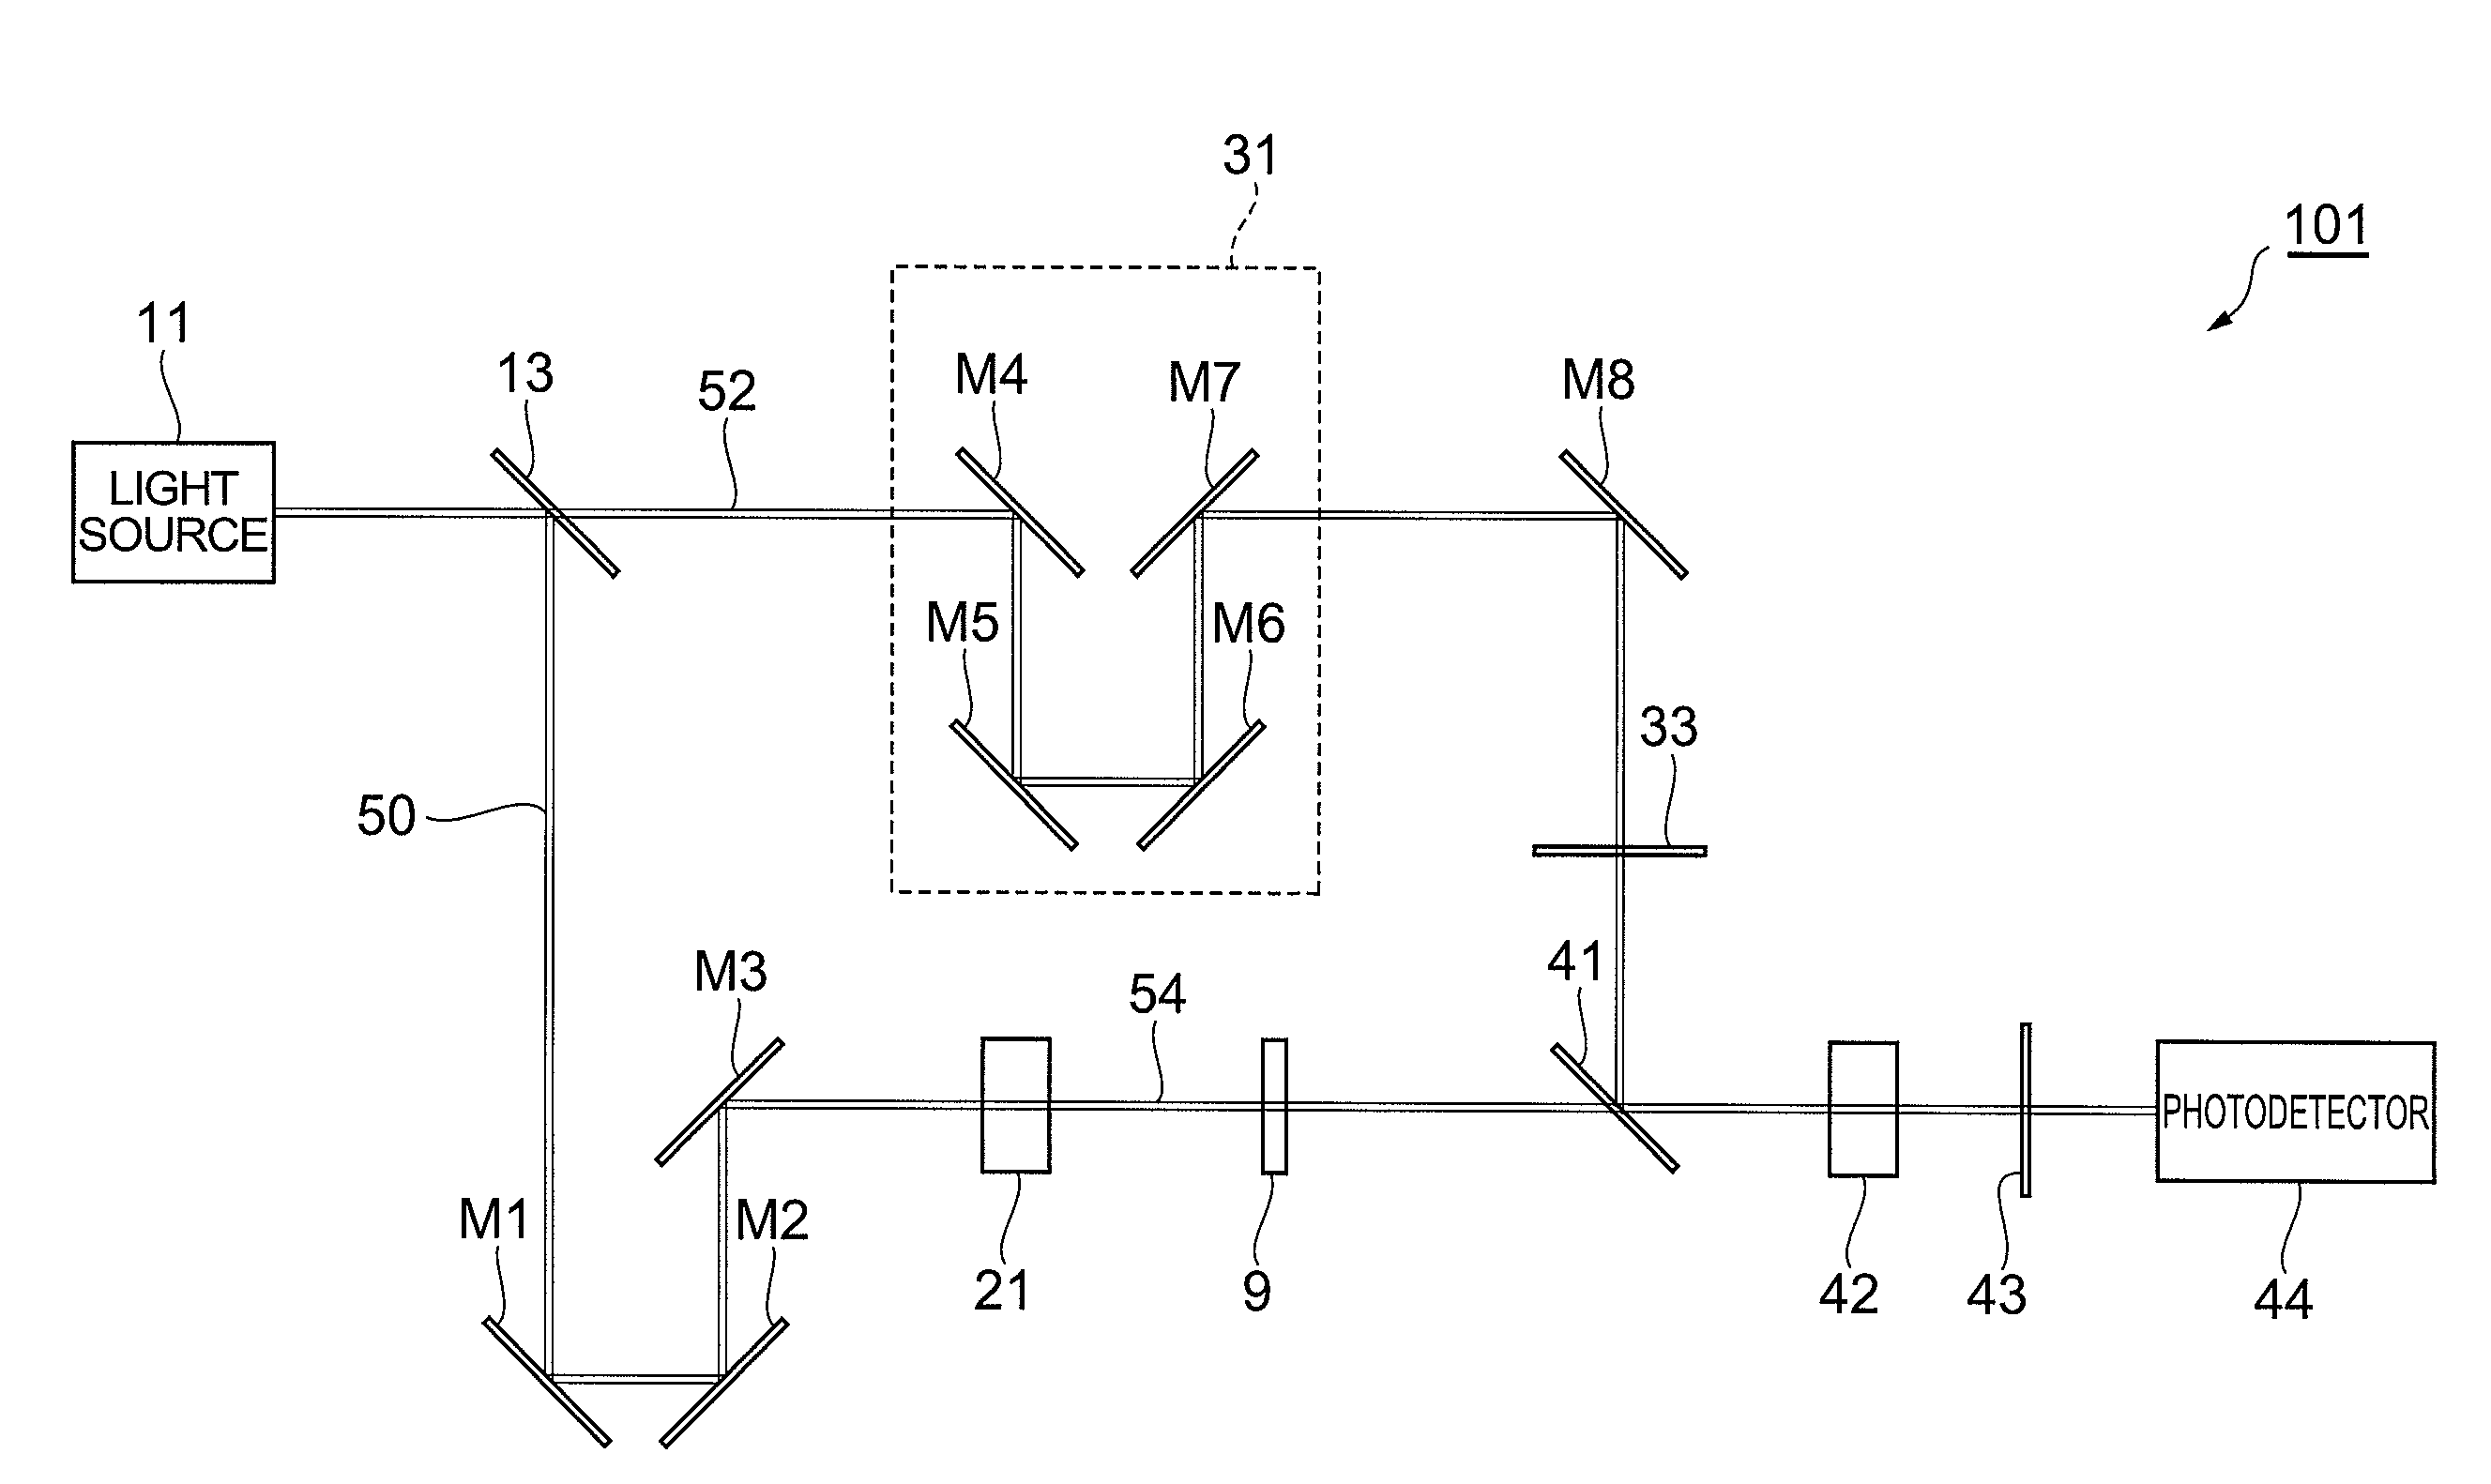 Single terahertz wave time-waveform measuring device